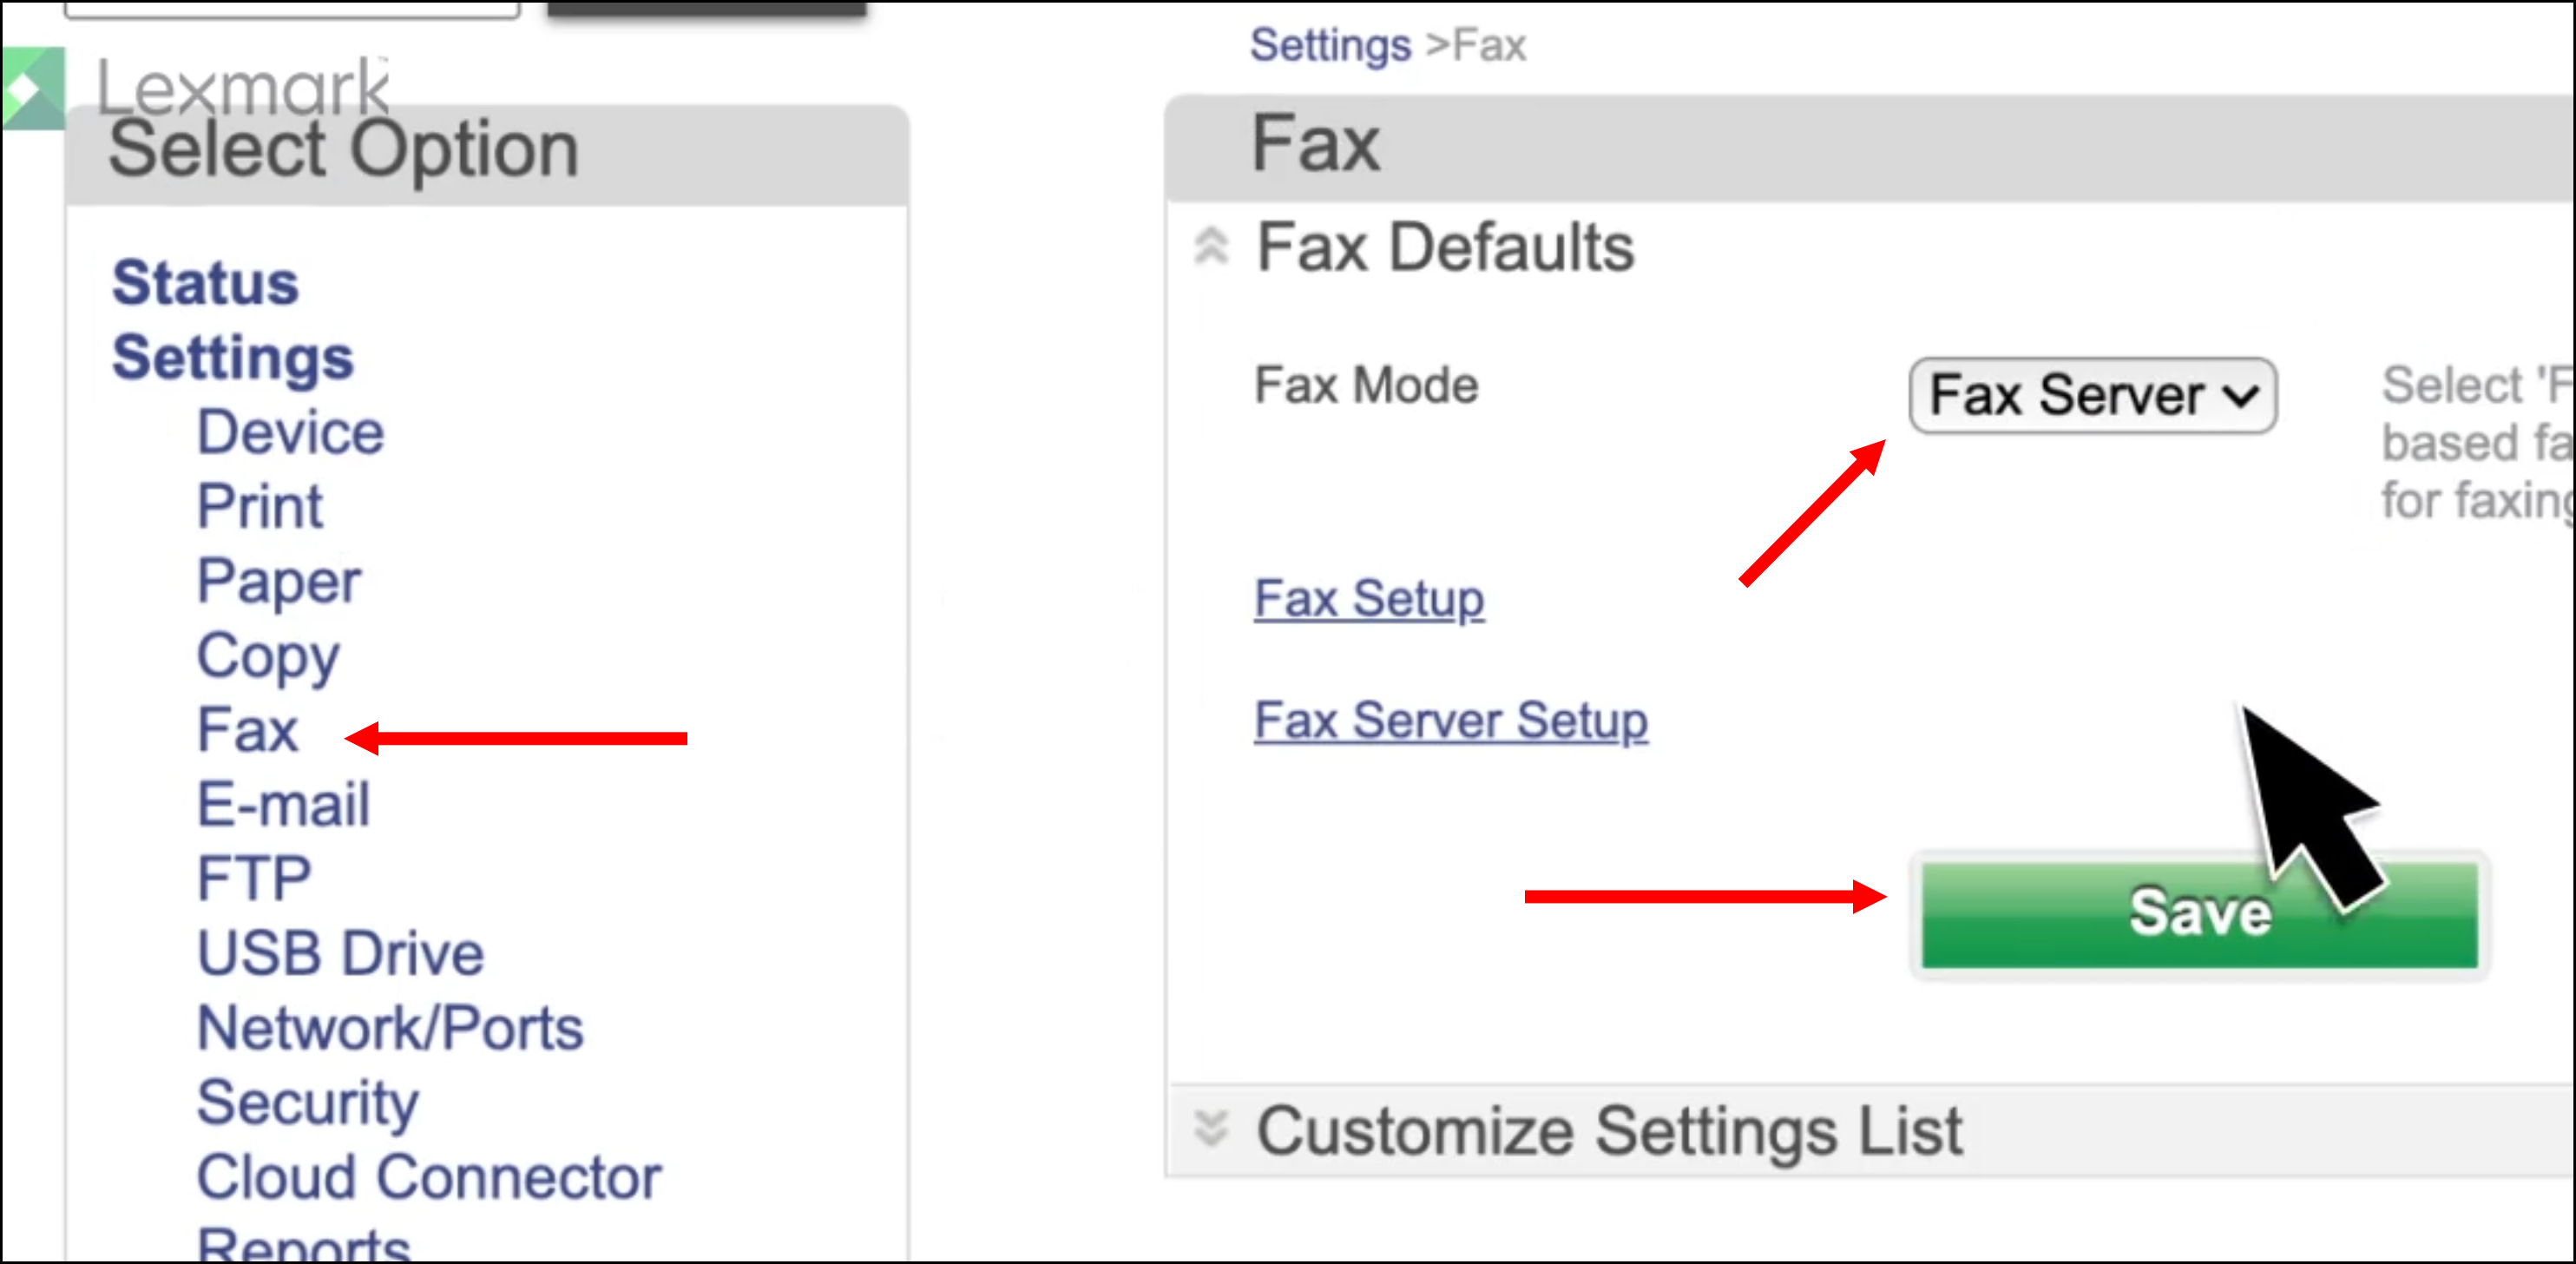 Lexmark Fax Setup page